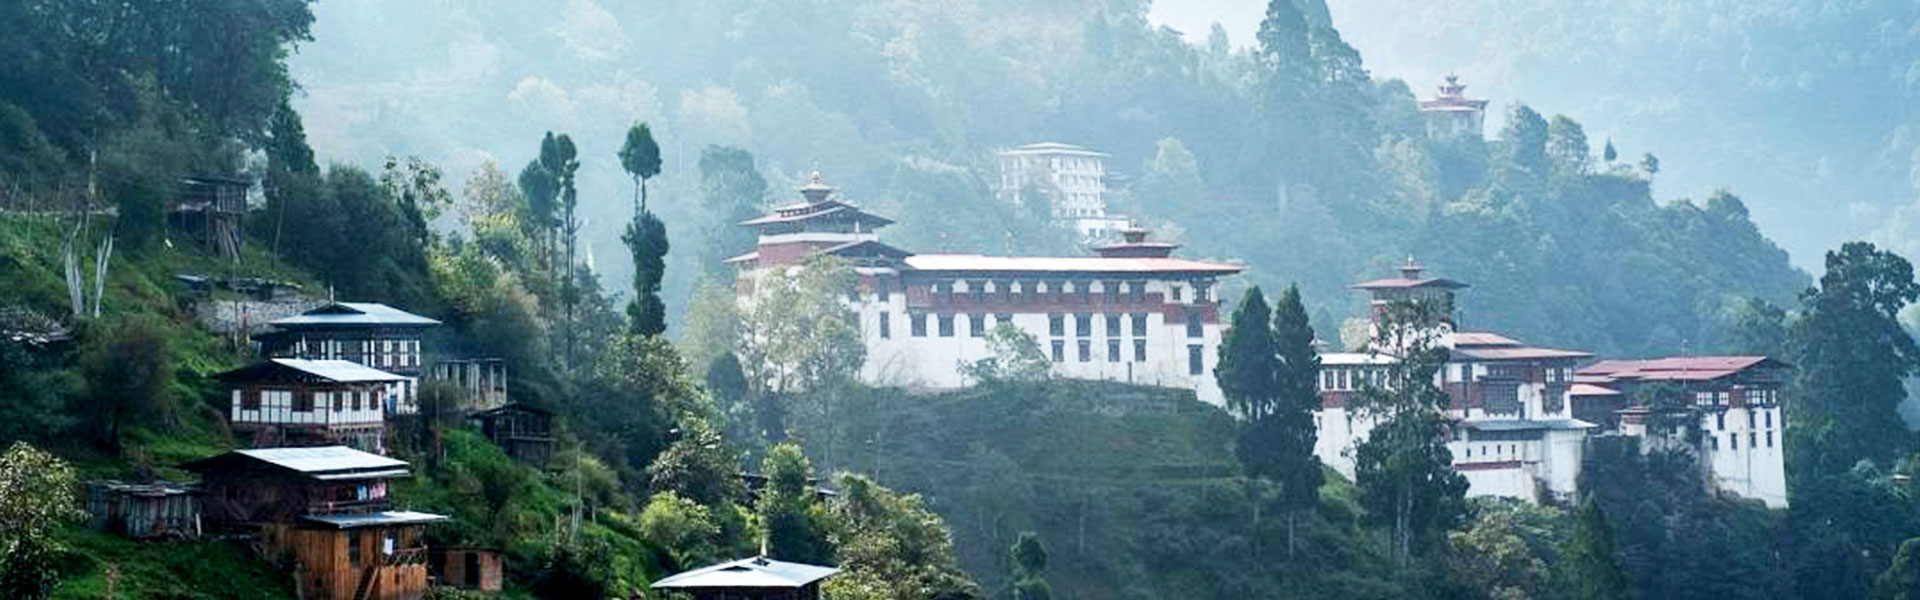 9 Nights 10 Days In Bhutan